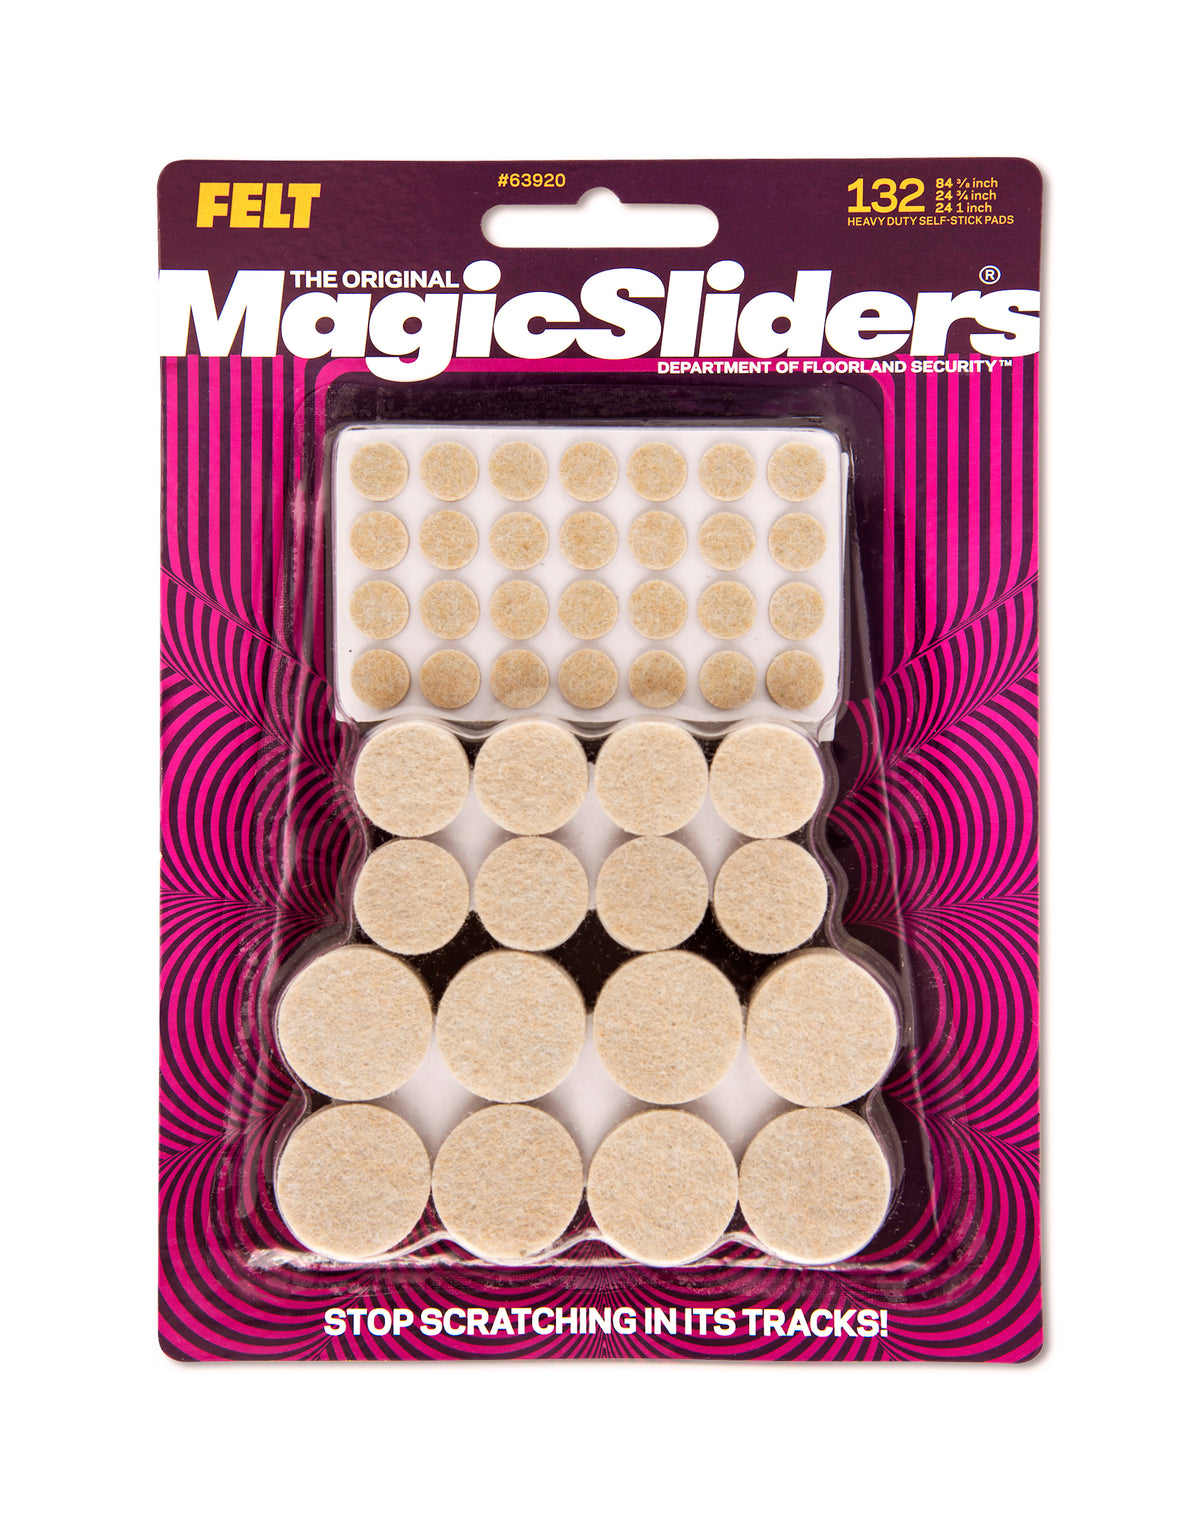 Mighty Mite Furniture Sliders, 5, 4/Pack